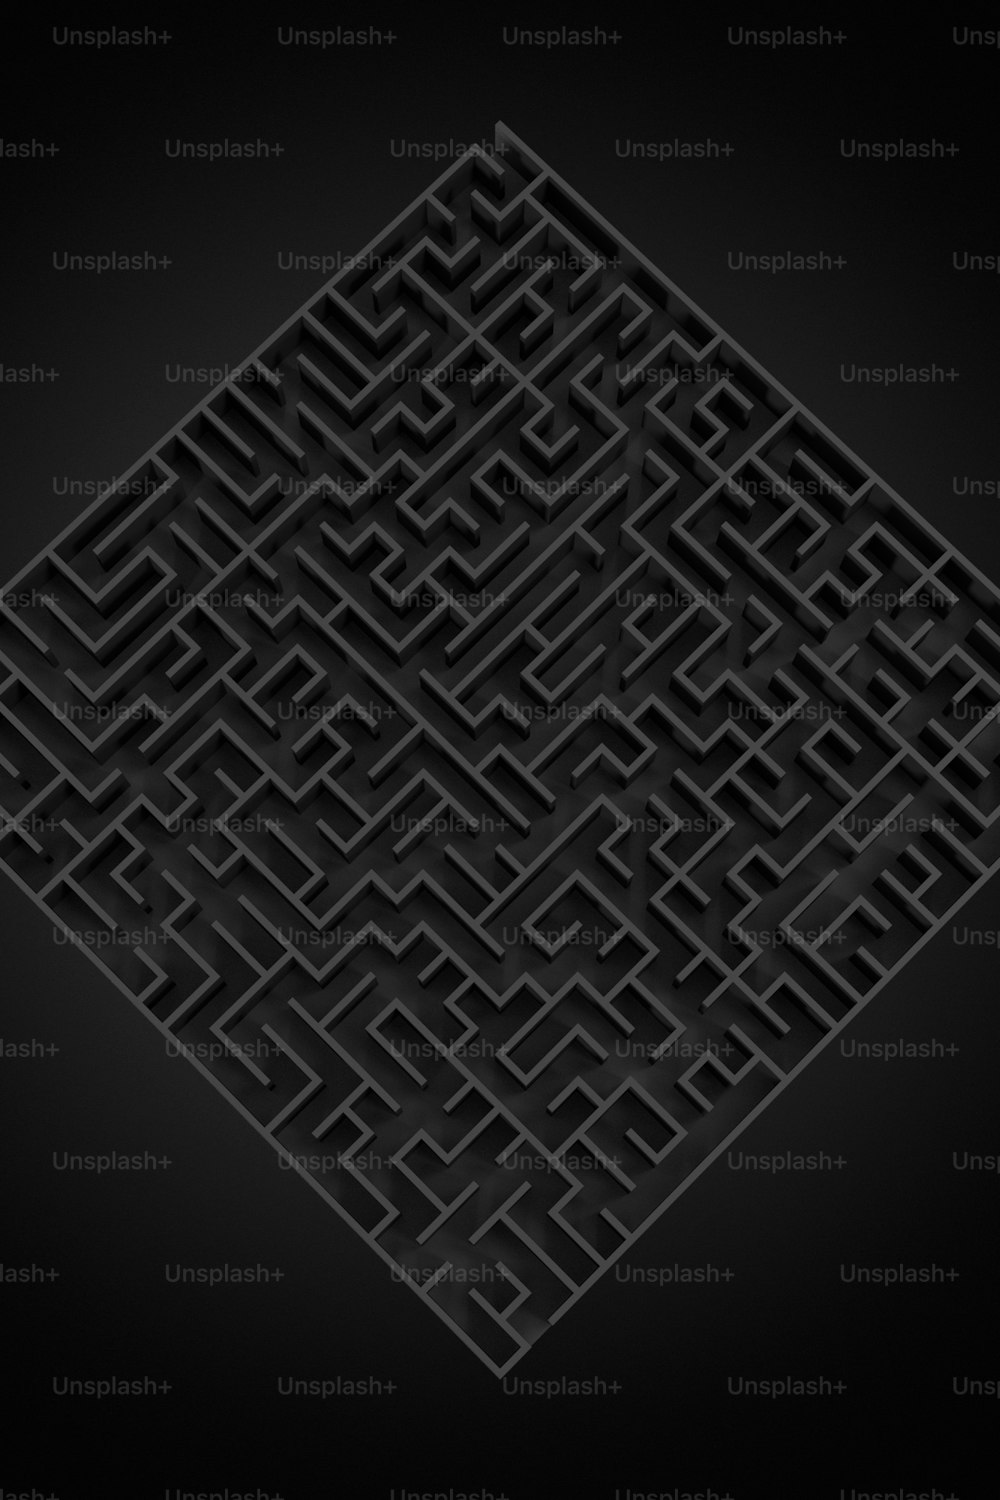 a black square maze on a black background